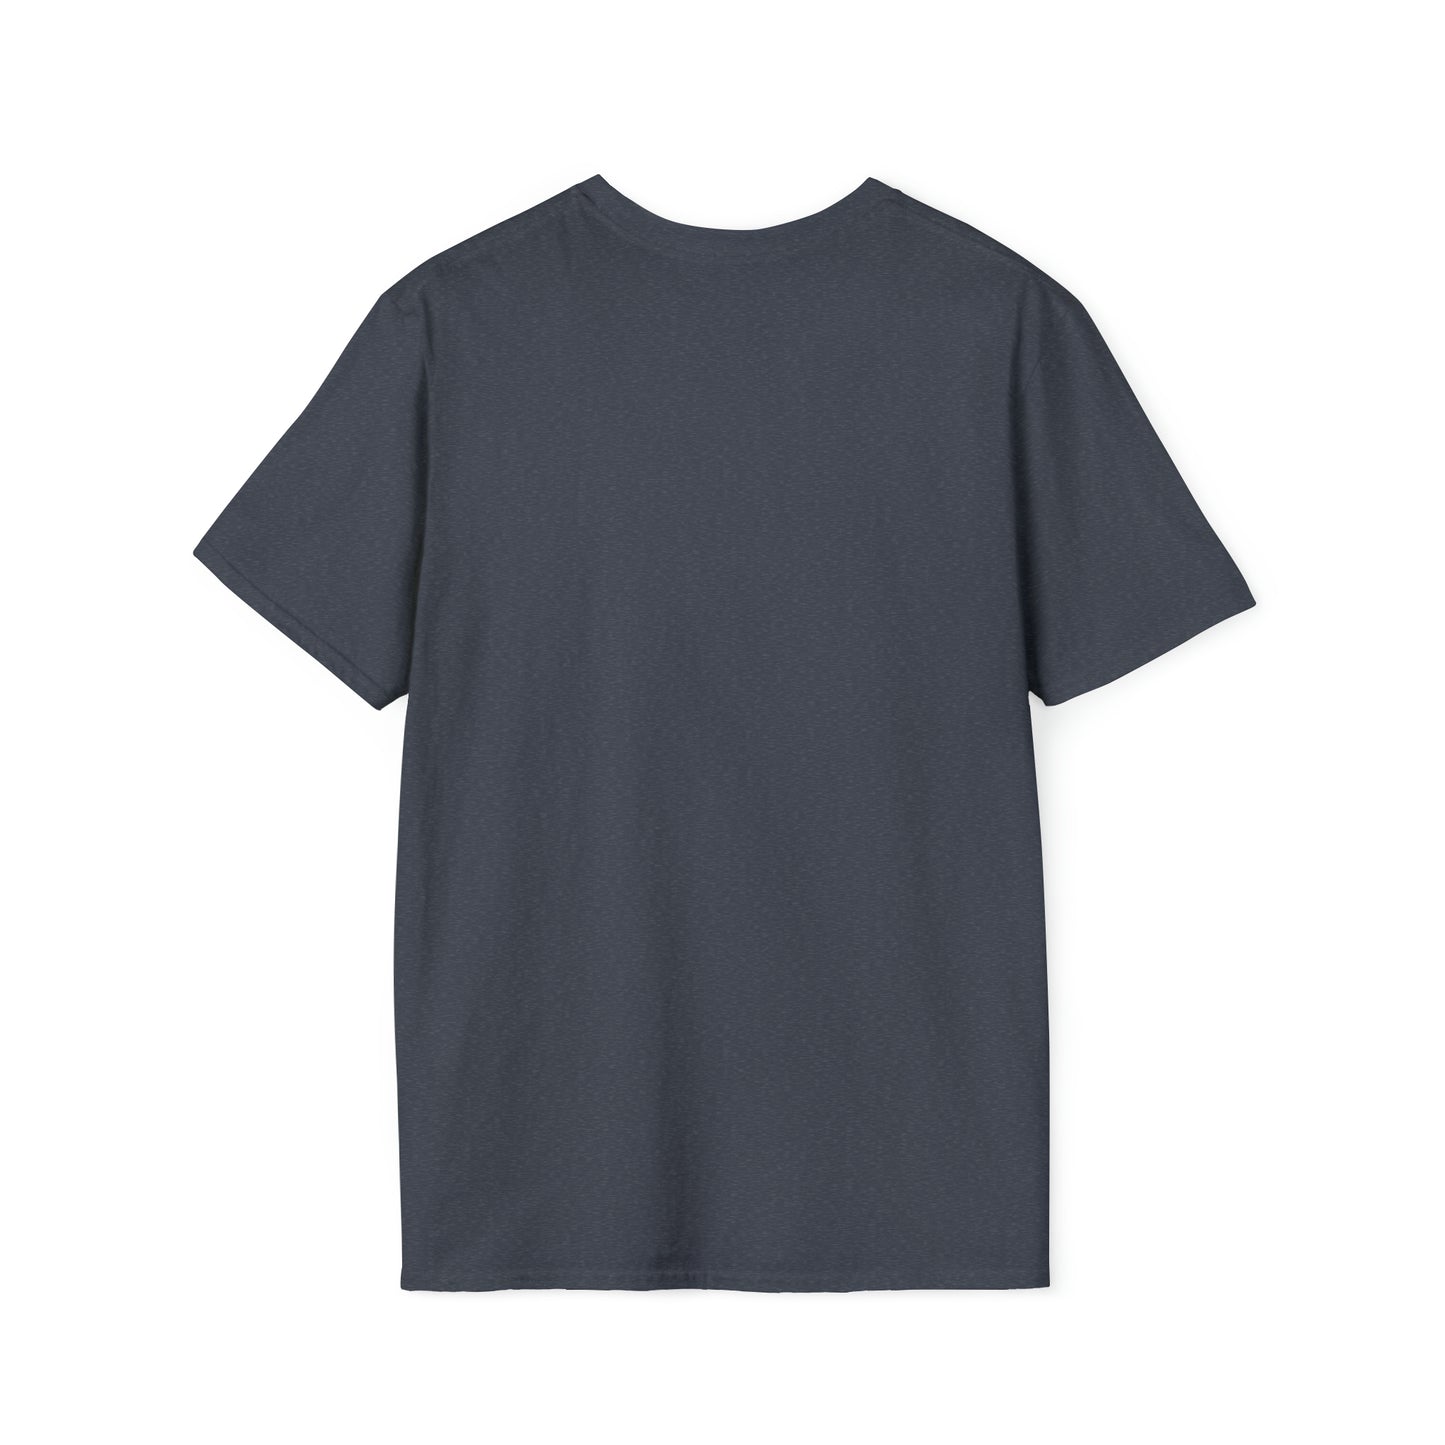 MAY CONTAIN Fireball Unisex Softstyle Bourbon T-Shirt